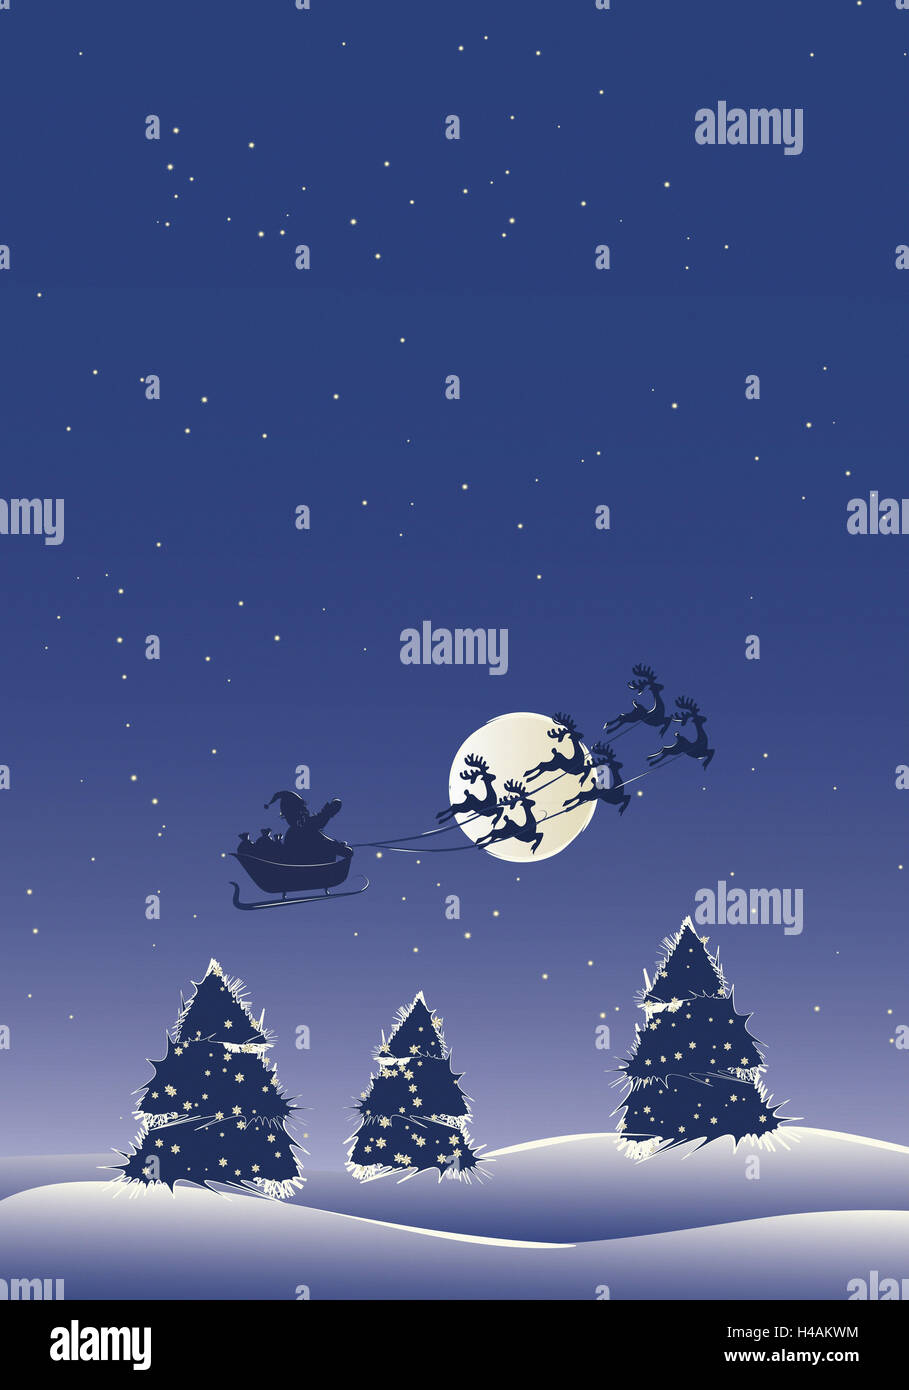 Illustration, Santa, reindeer sleigh, flying, Christmas presents, forest, moonlit night, Stock Photo